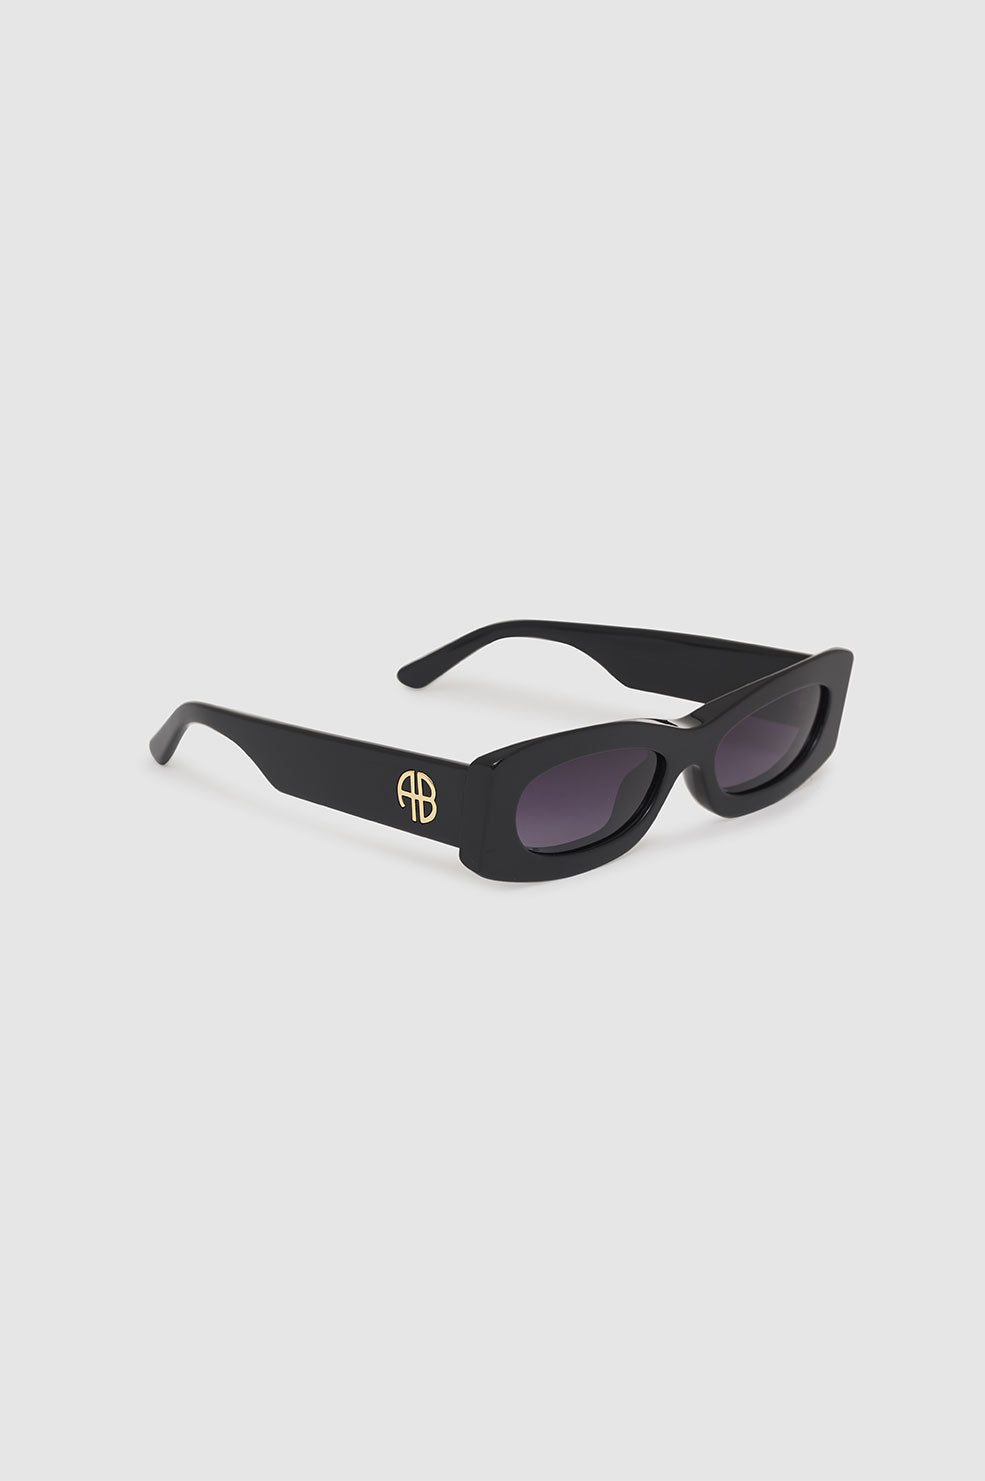 ANINE BING Malibu Sunglasses - Black